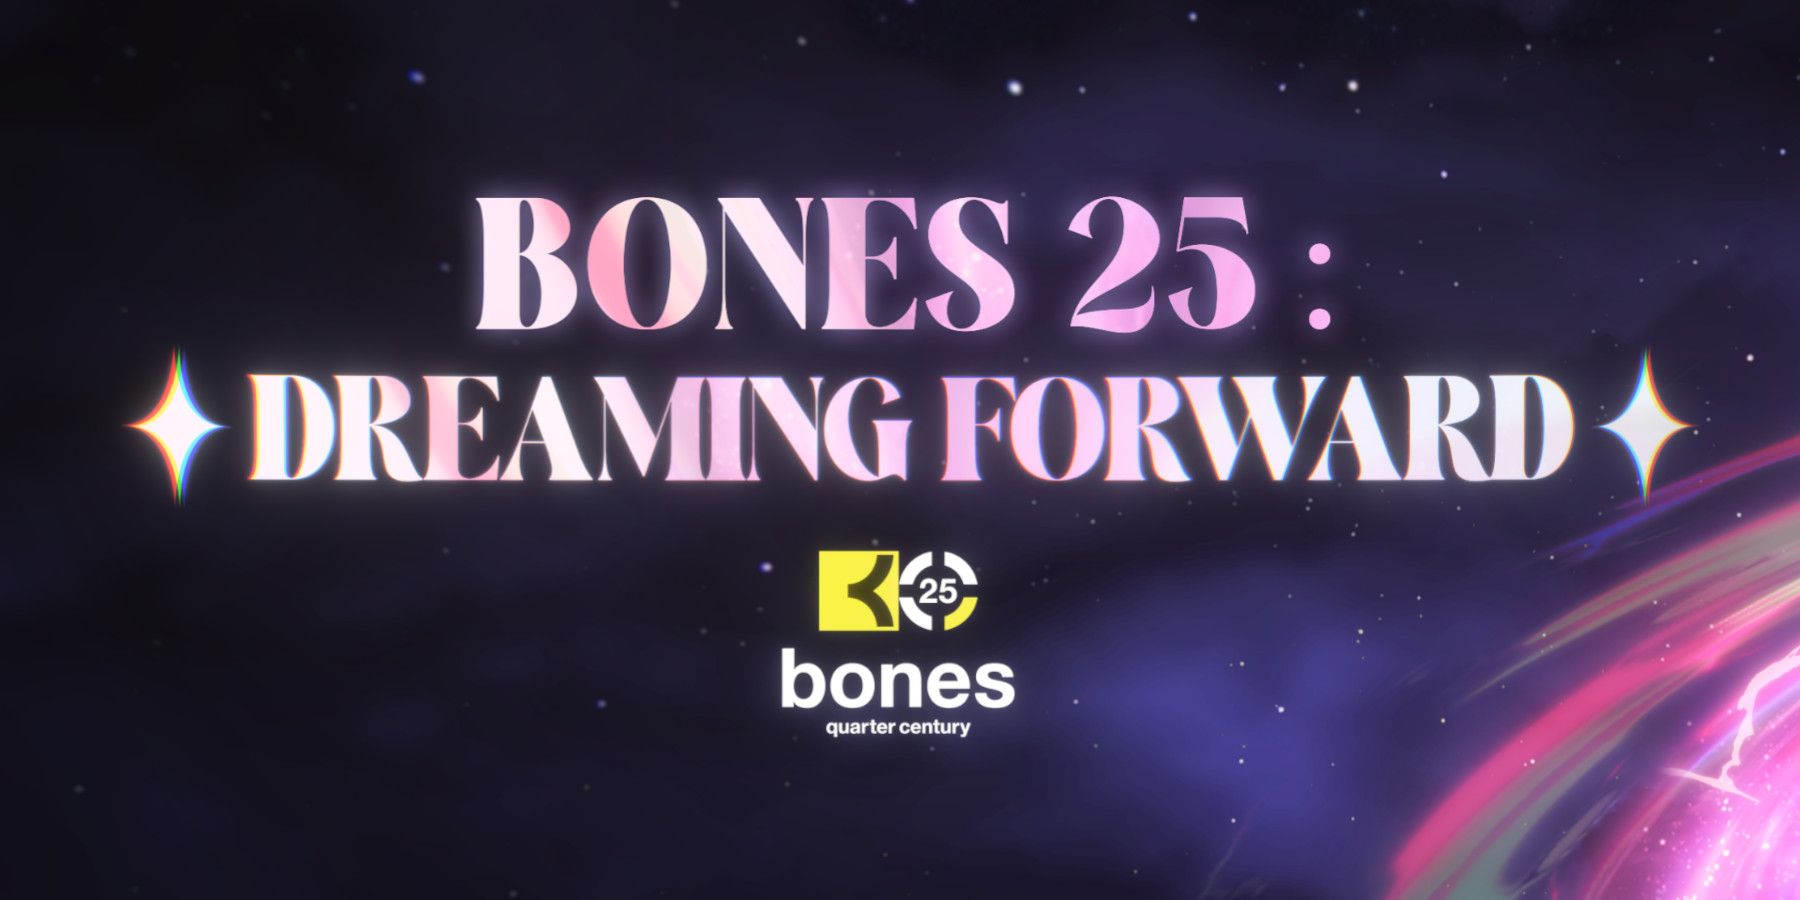 bones-25-dreaming-forward-featured-2